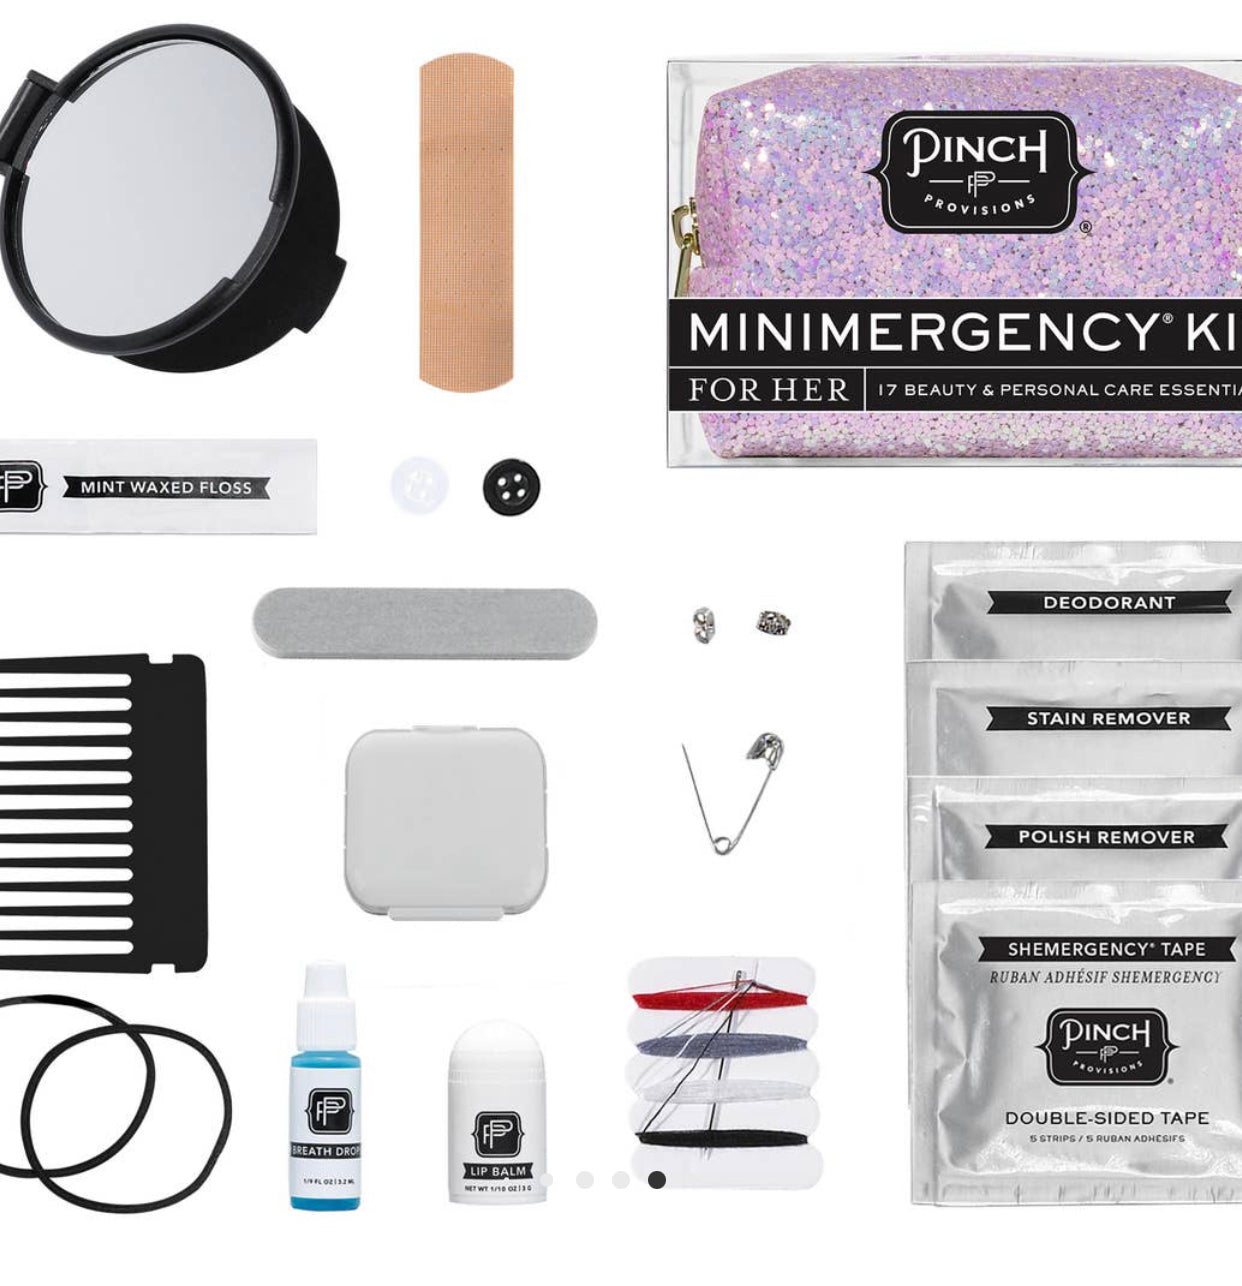 Glitter Bomb Minimergency Kits - Lavender